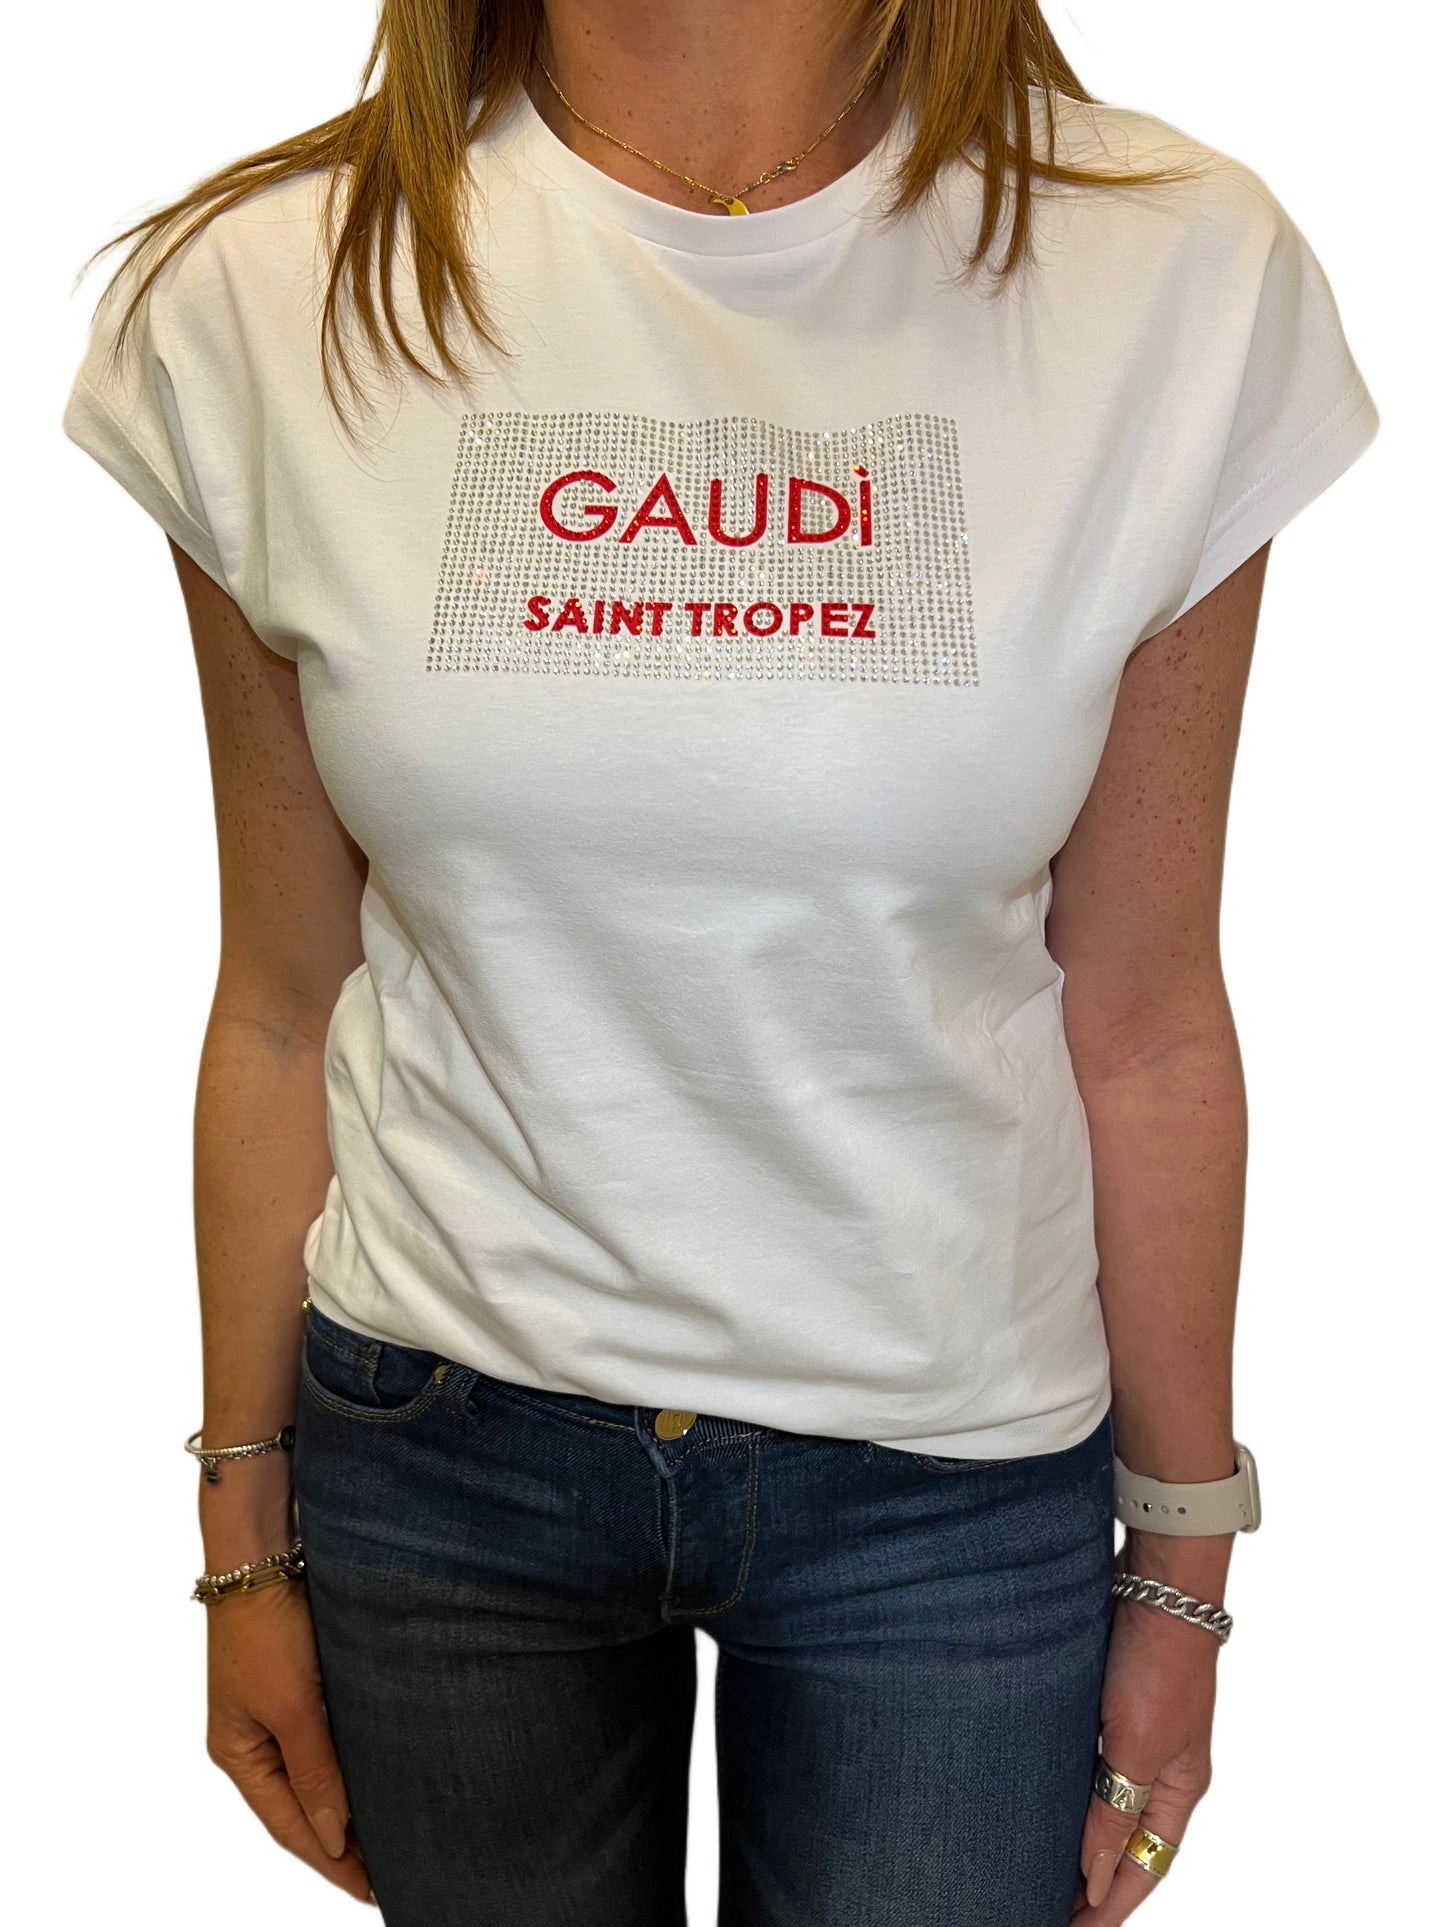 T-Shirt basci saint tropez Gaudì